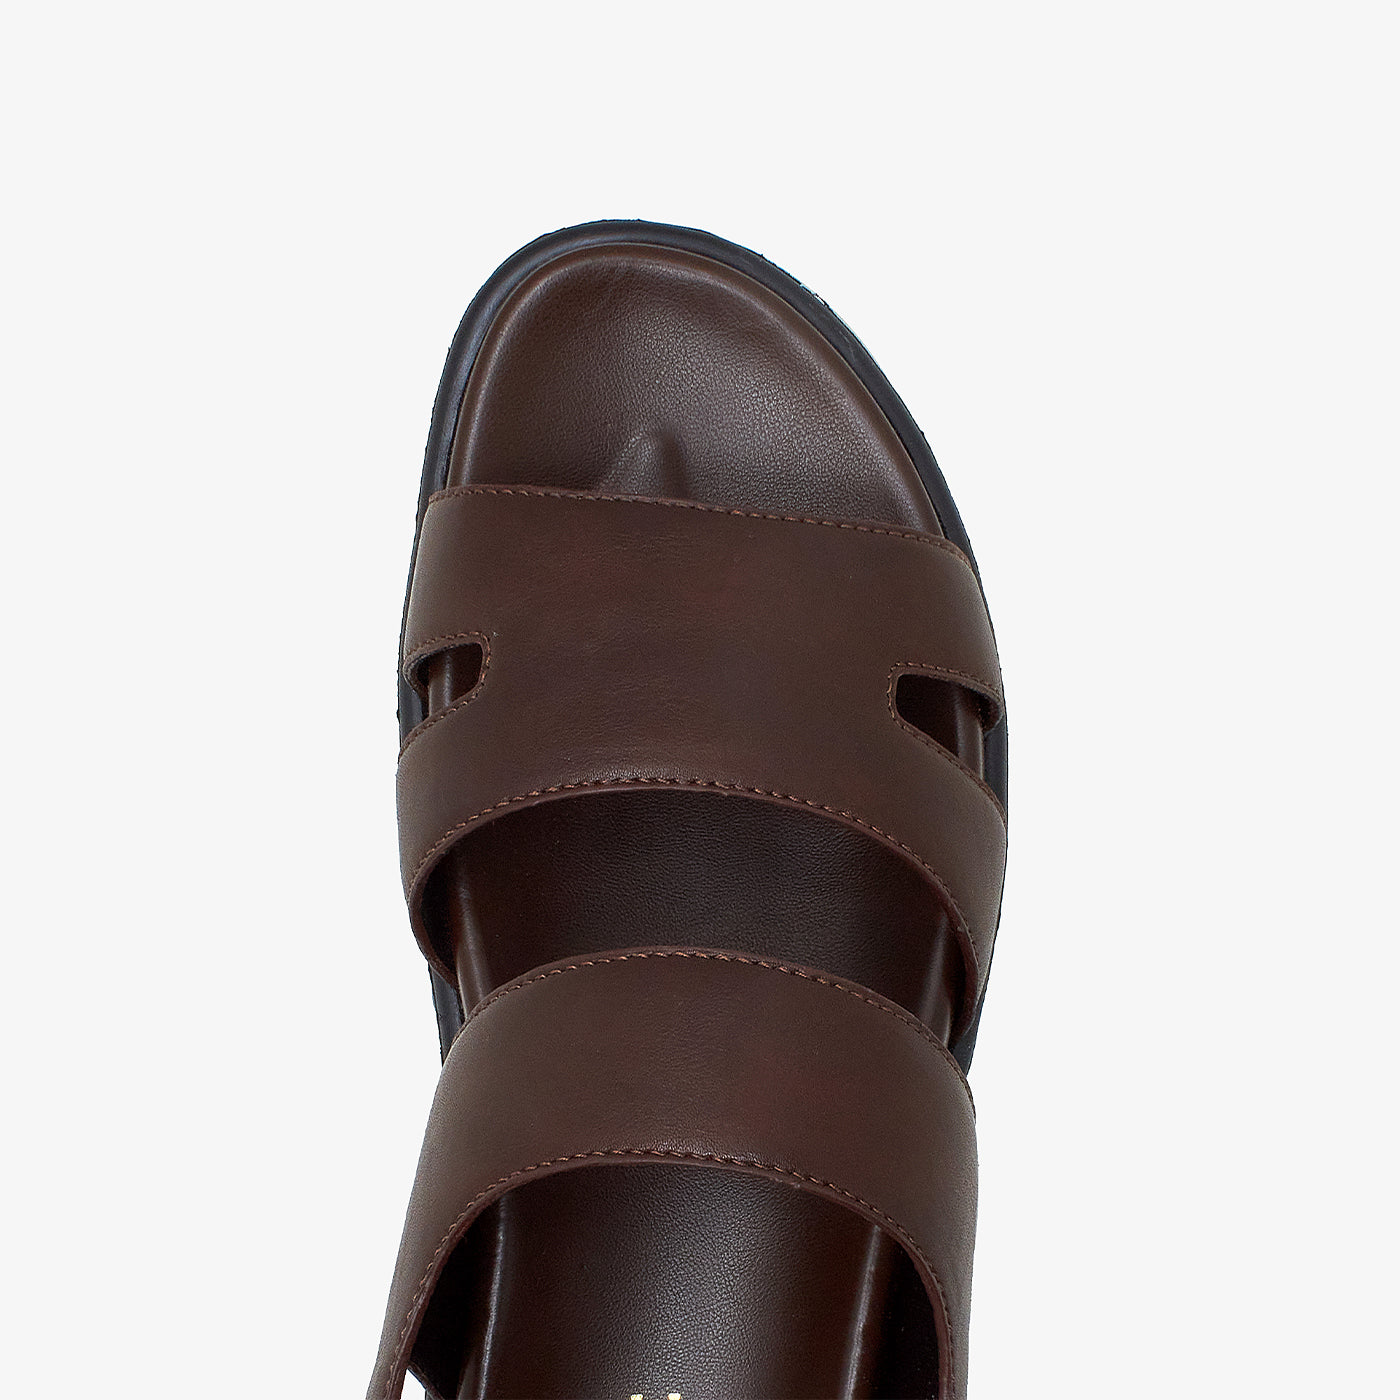 Men's Backstrap Soft Sandals